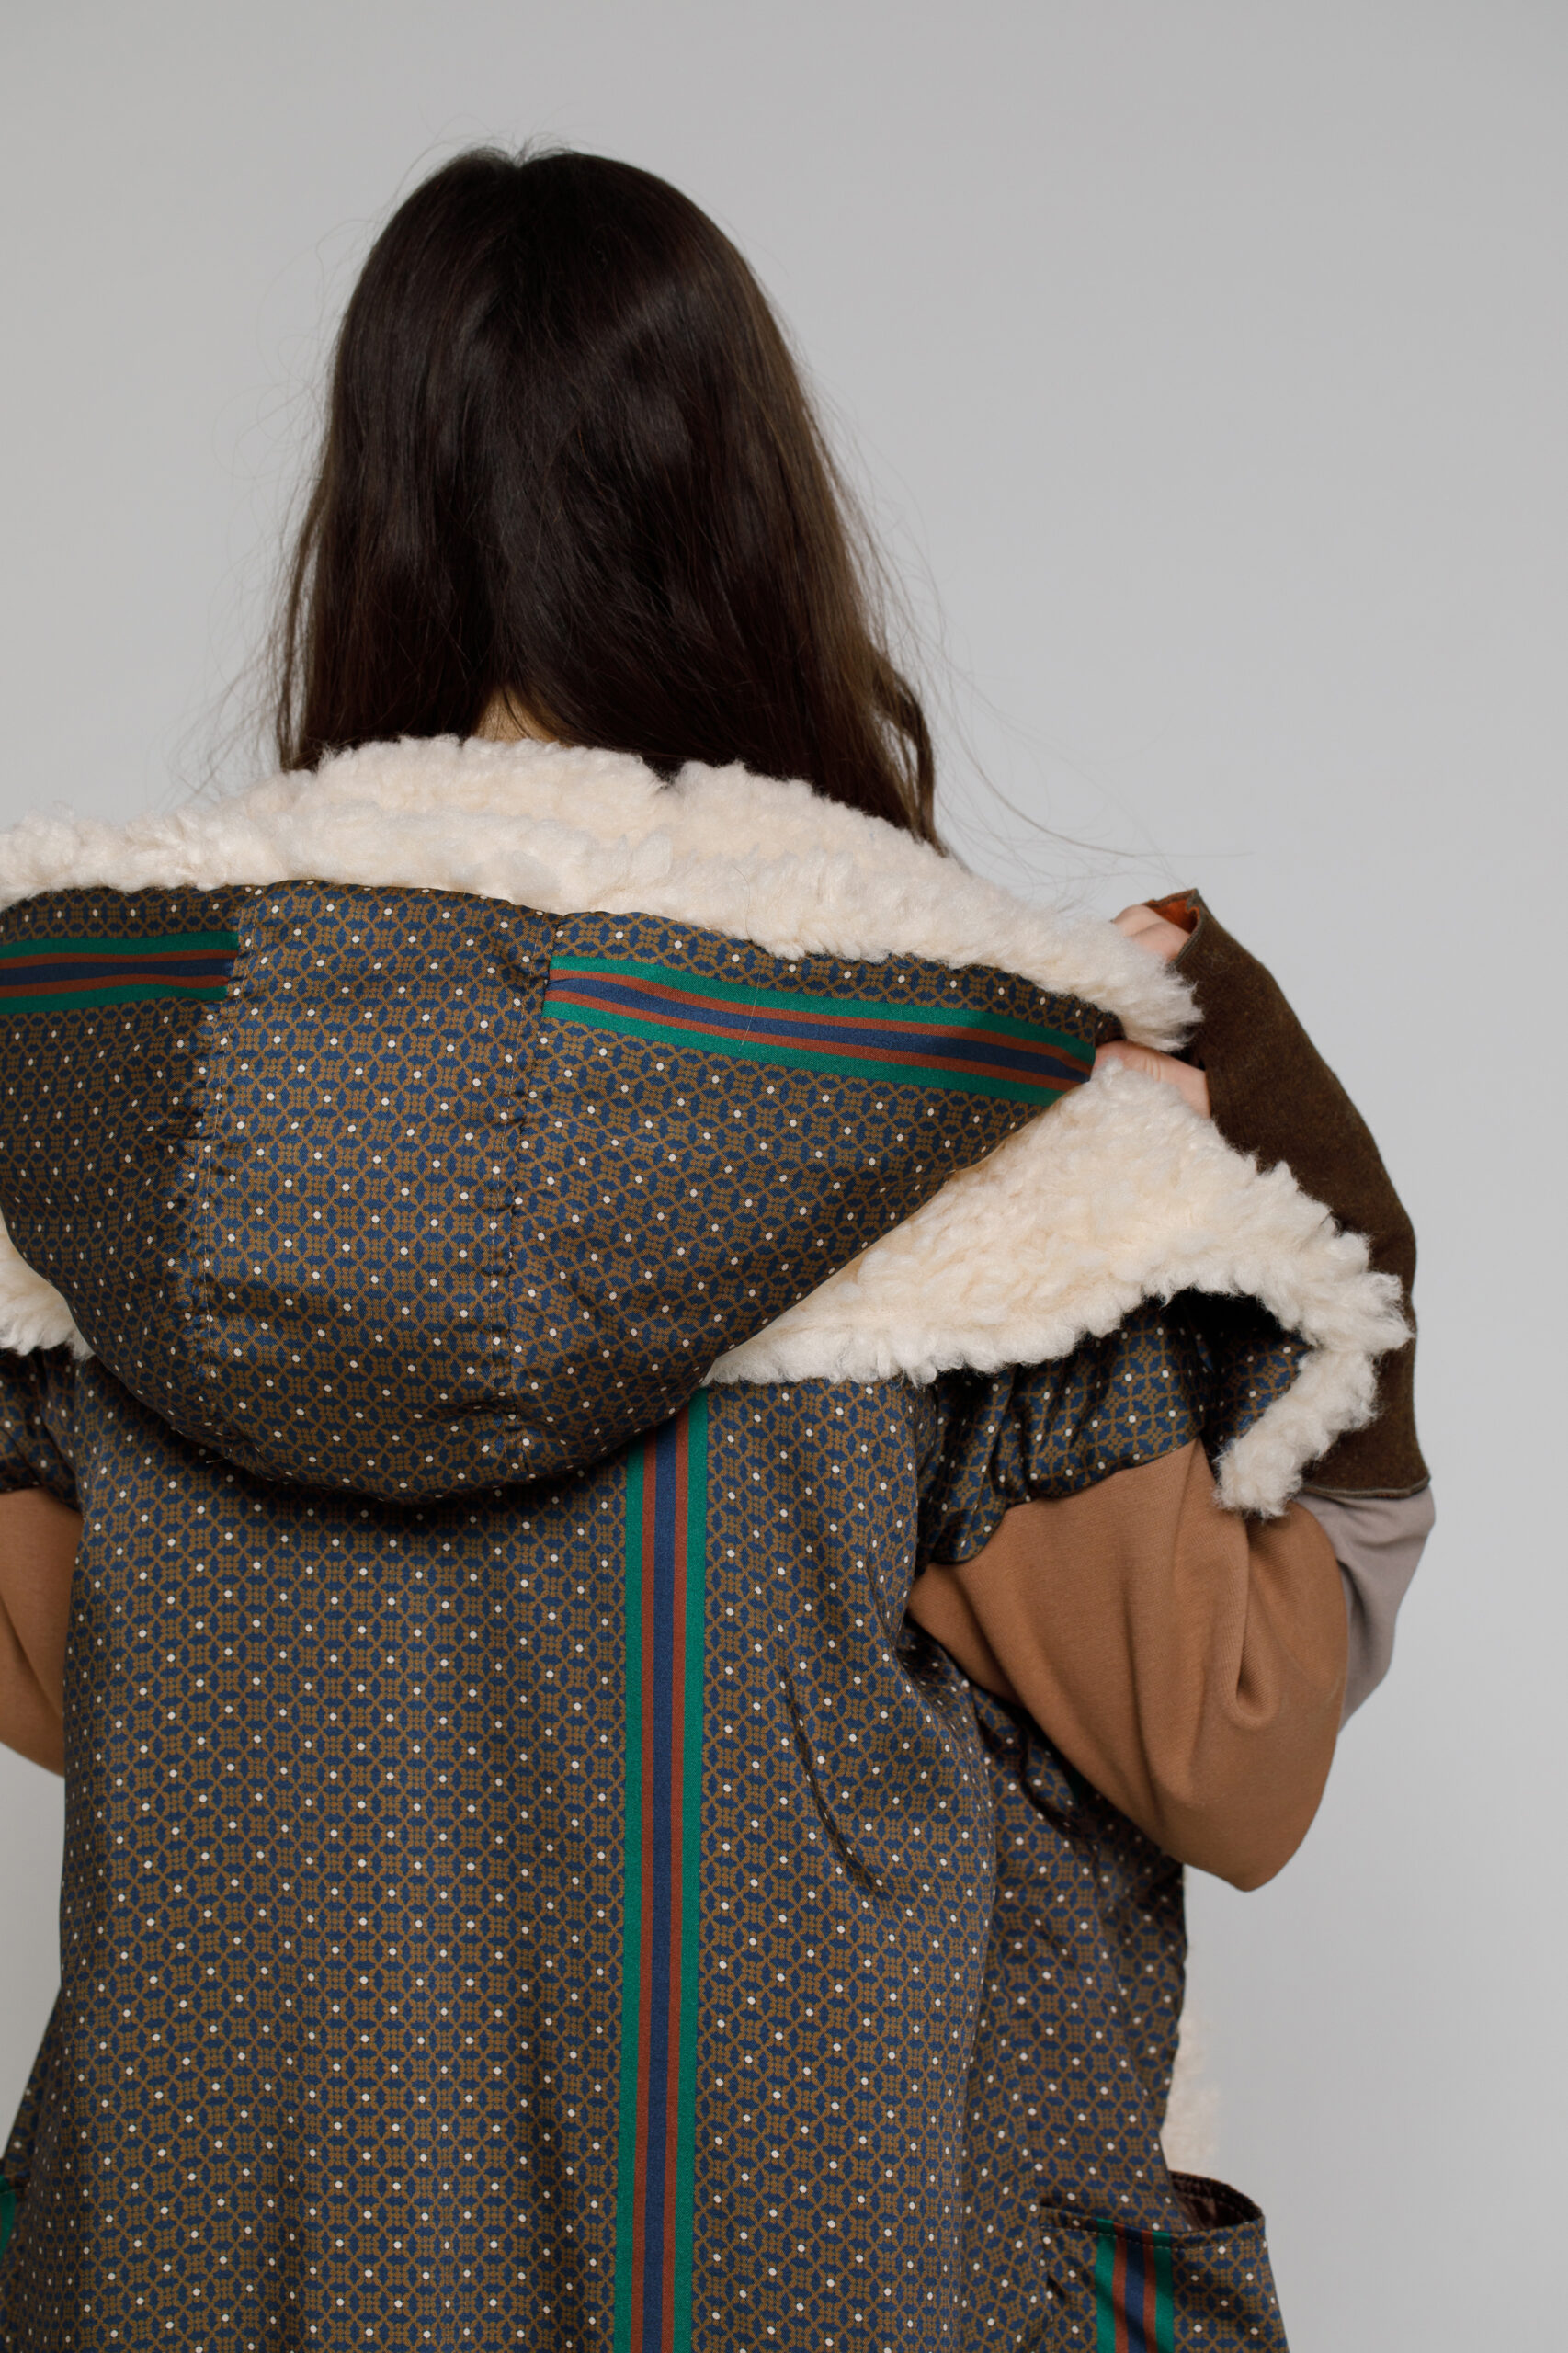 DOMA 23 satin OVERCOAT with fur. Natural fabrics, original design, handmade embroidery